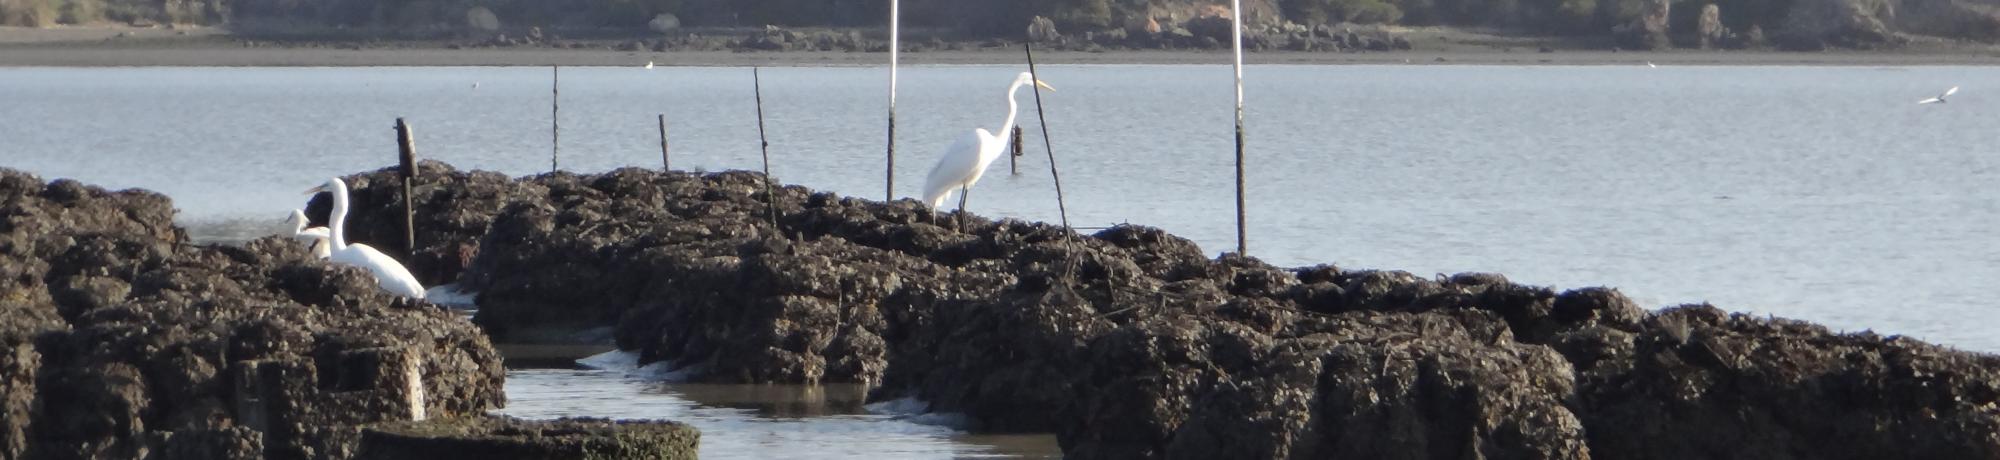 Egrets hunting in oyster restoration site